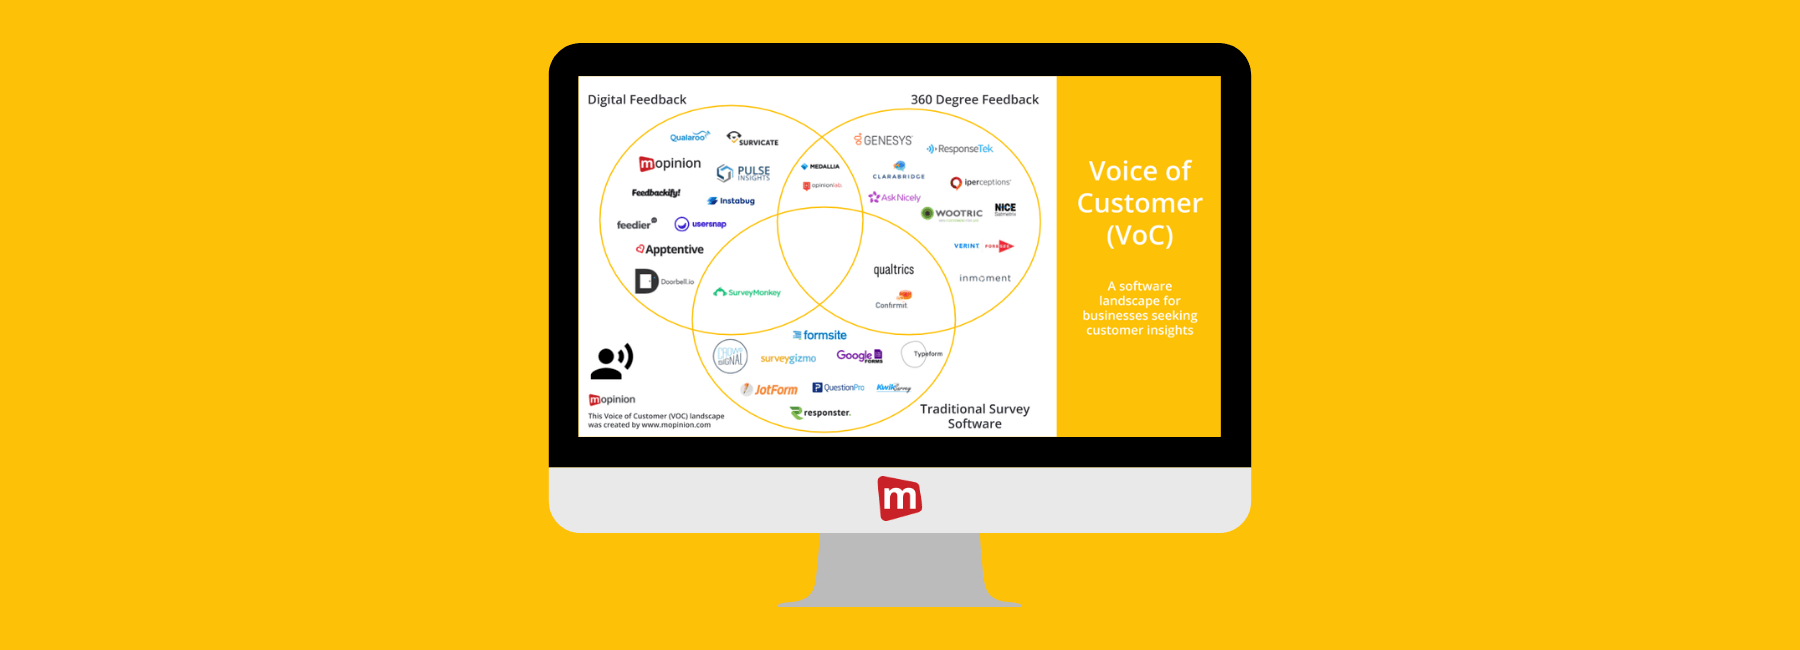 Mopinions 2020 Voice of Customer (VoC) Software landschap